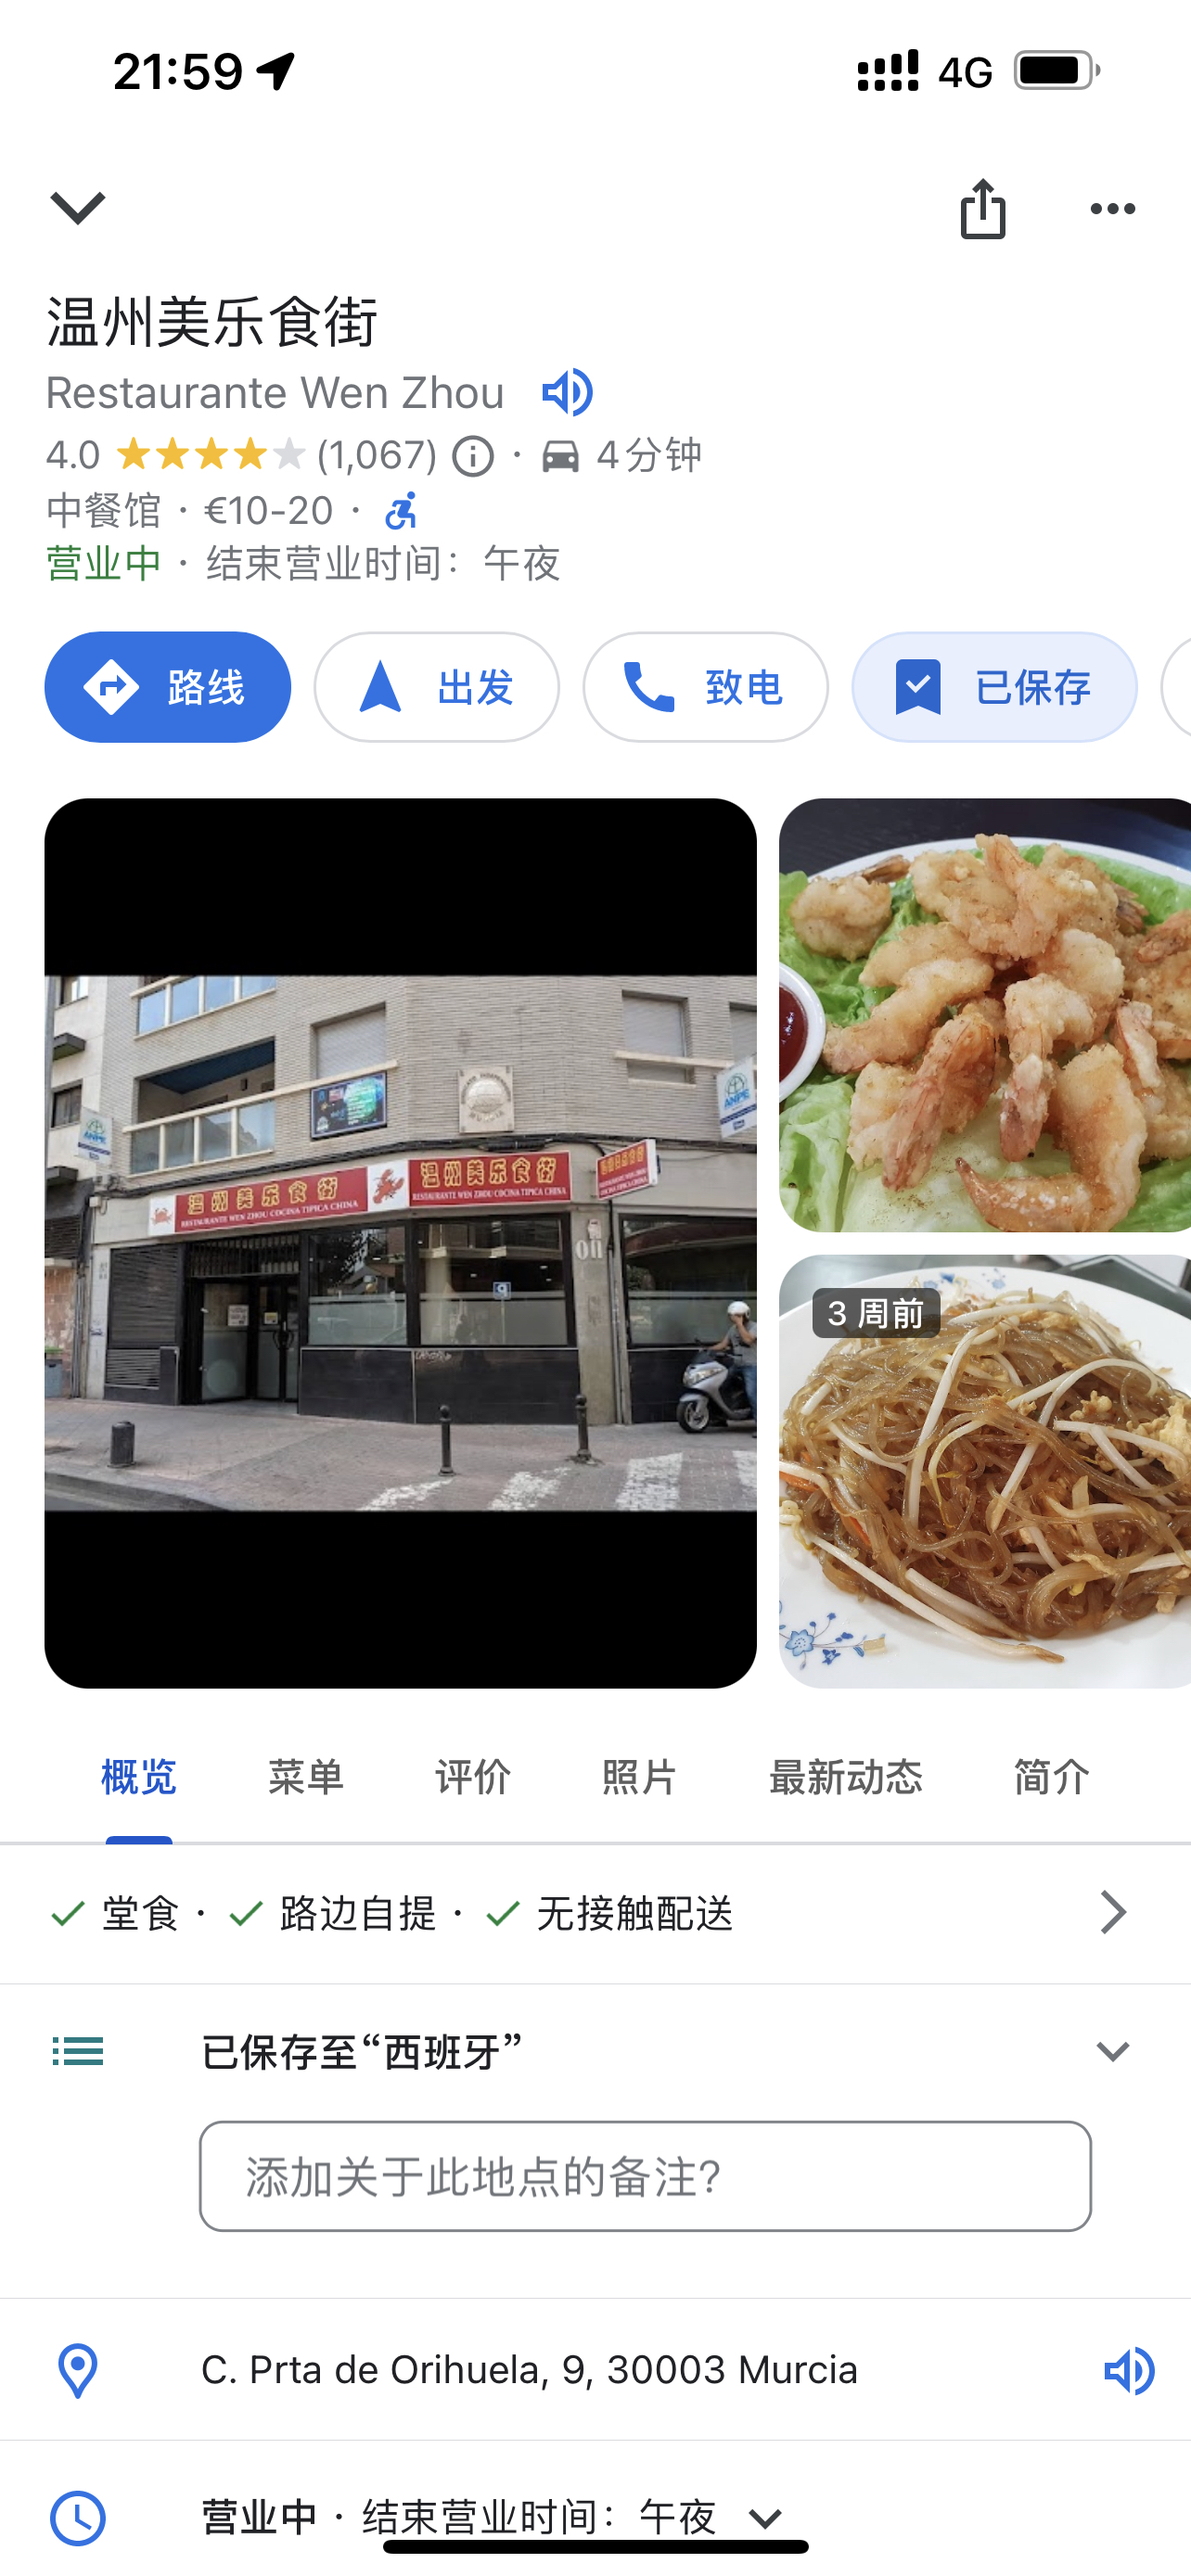 推荐Morcia中国餐馆